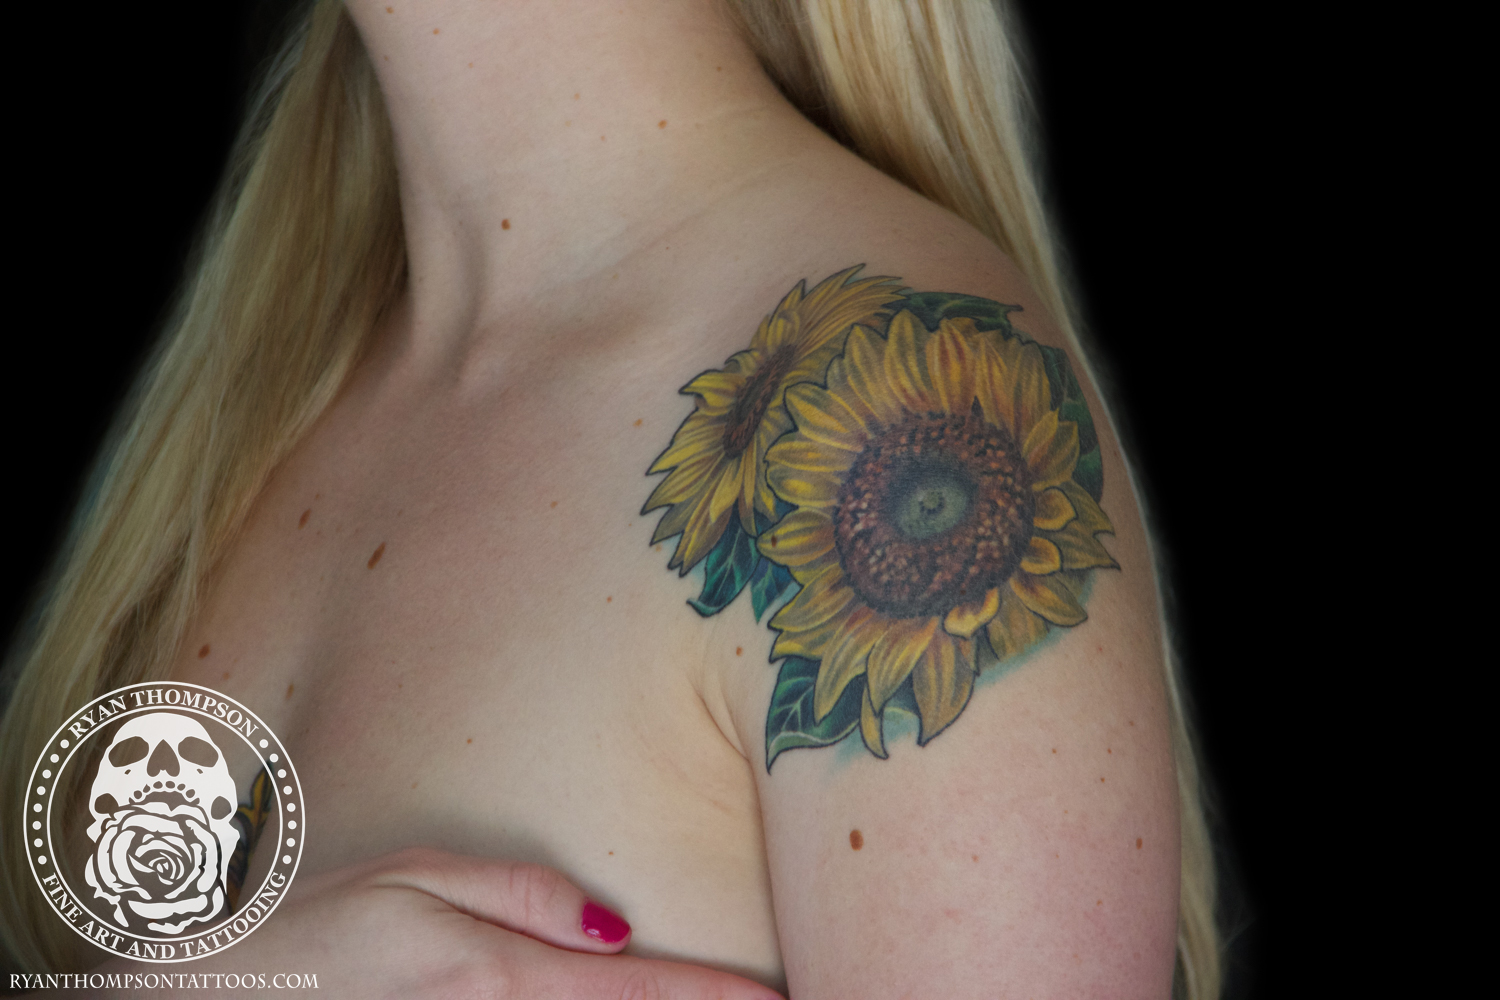 Emily's Sunflowers